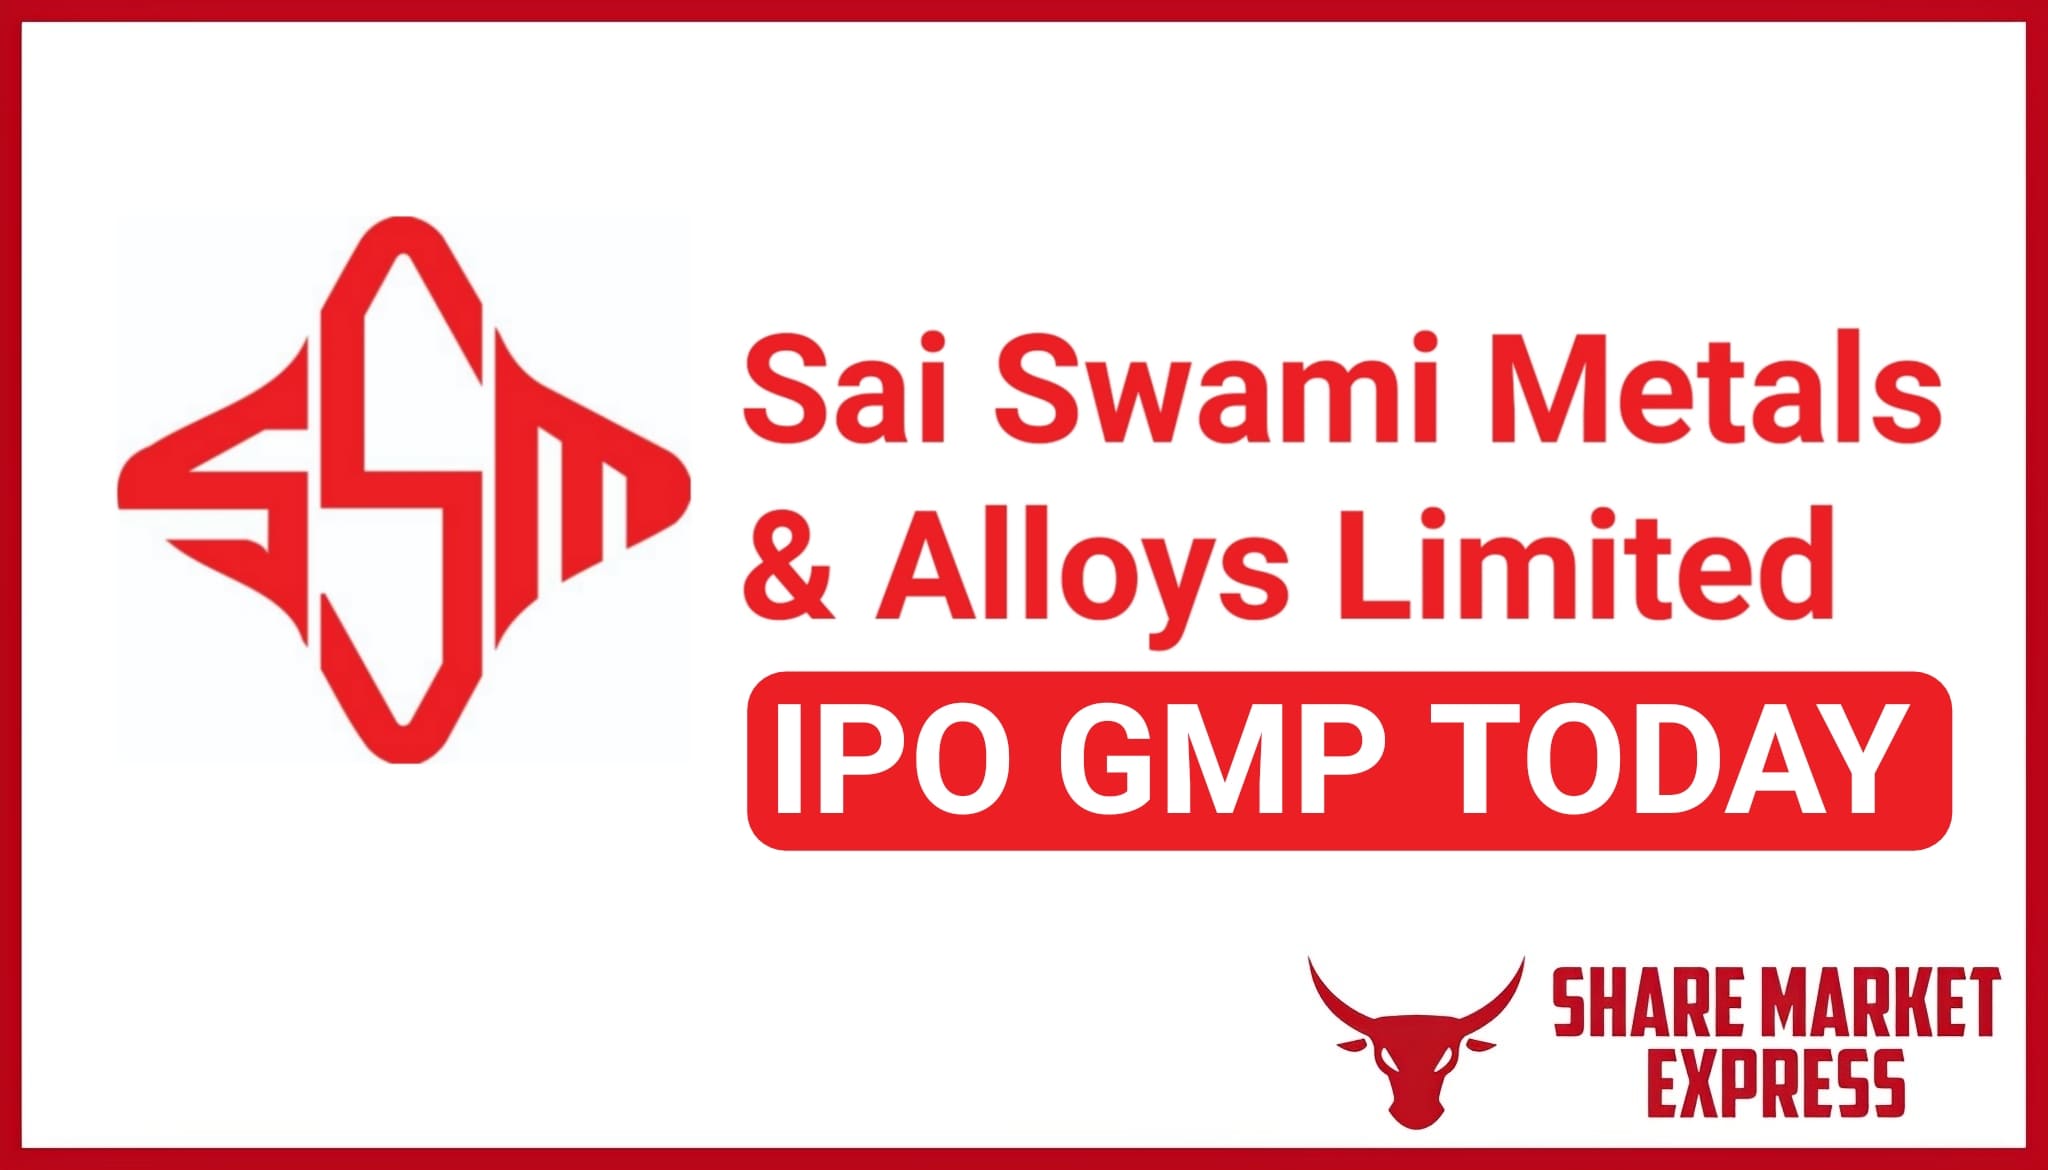 Sai Swami Metals IPO GMP Today